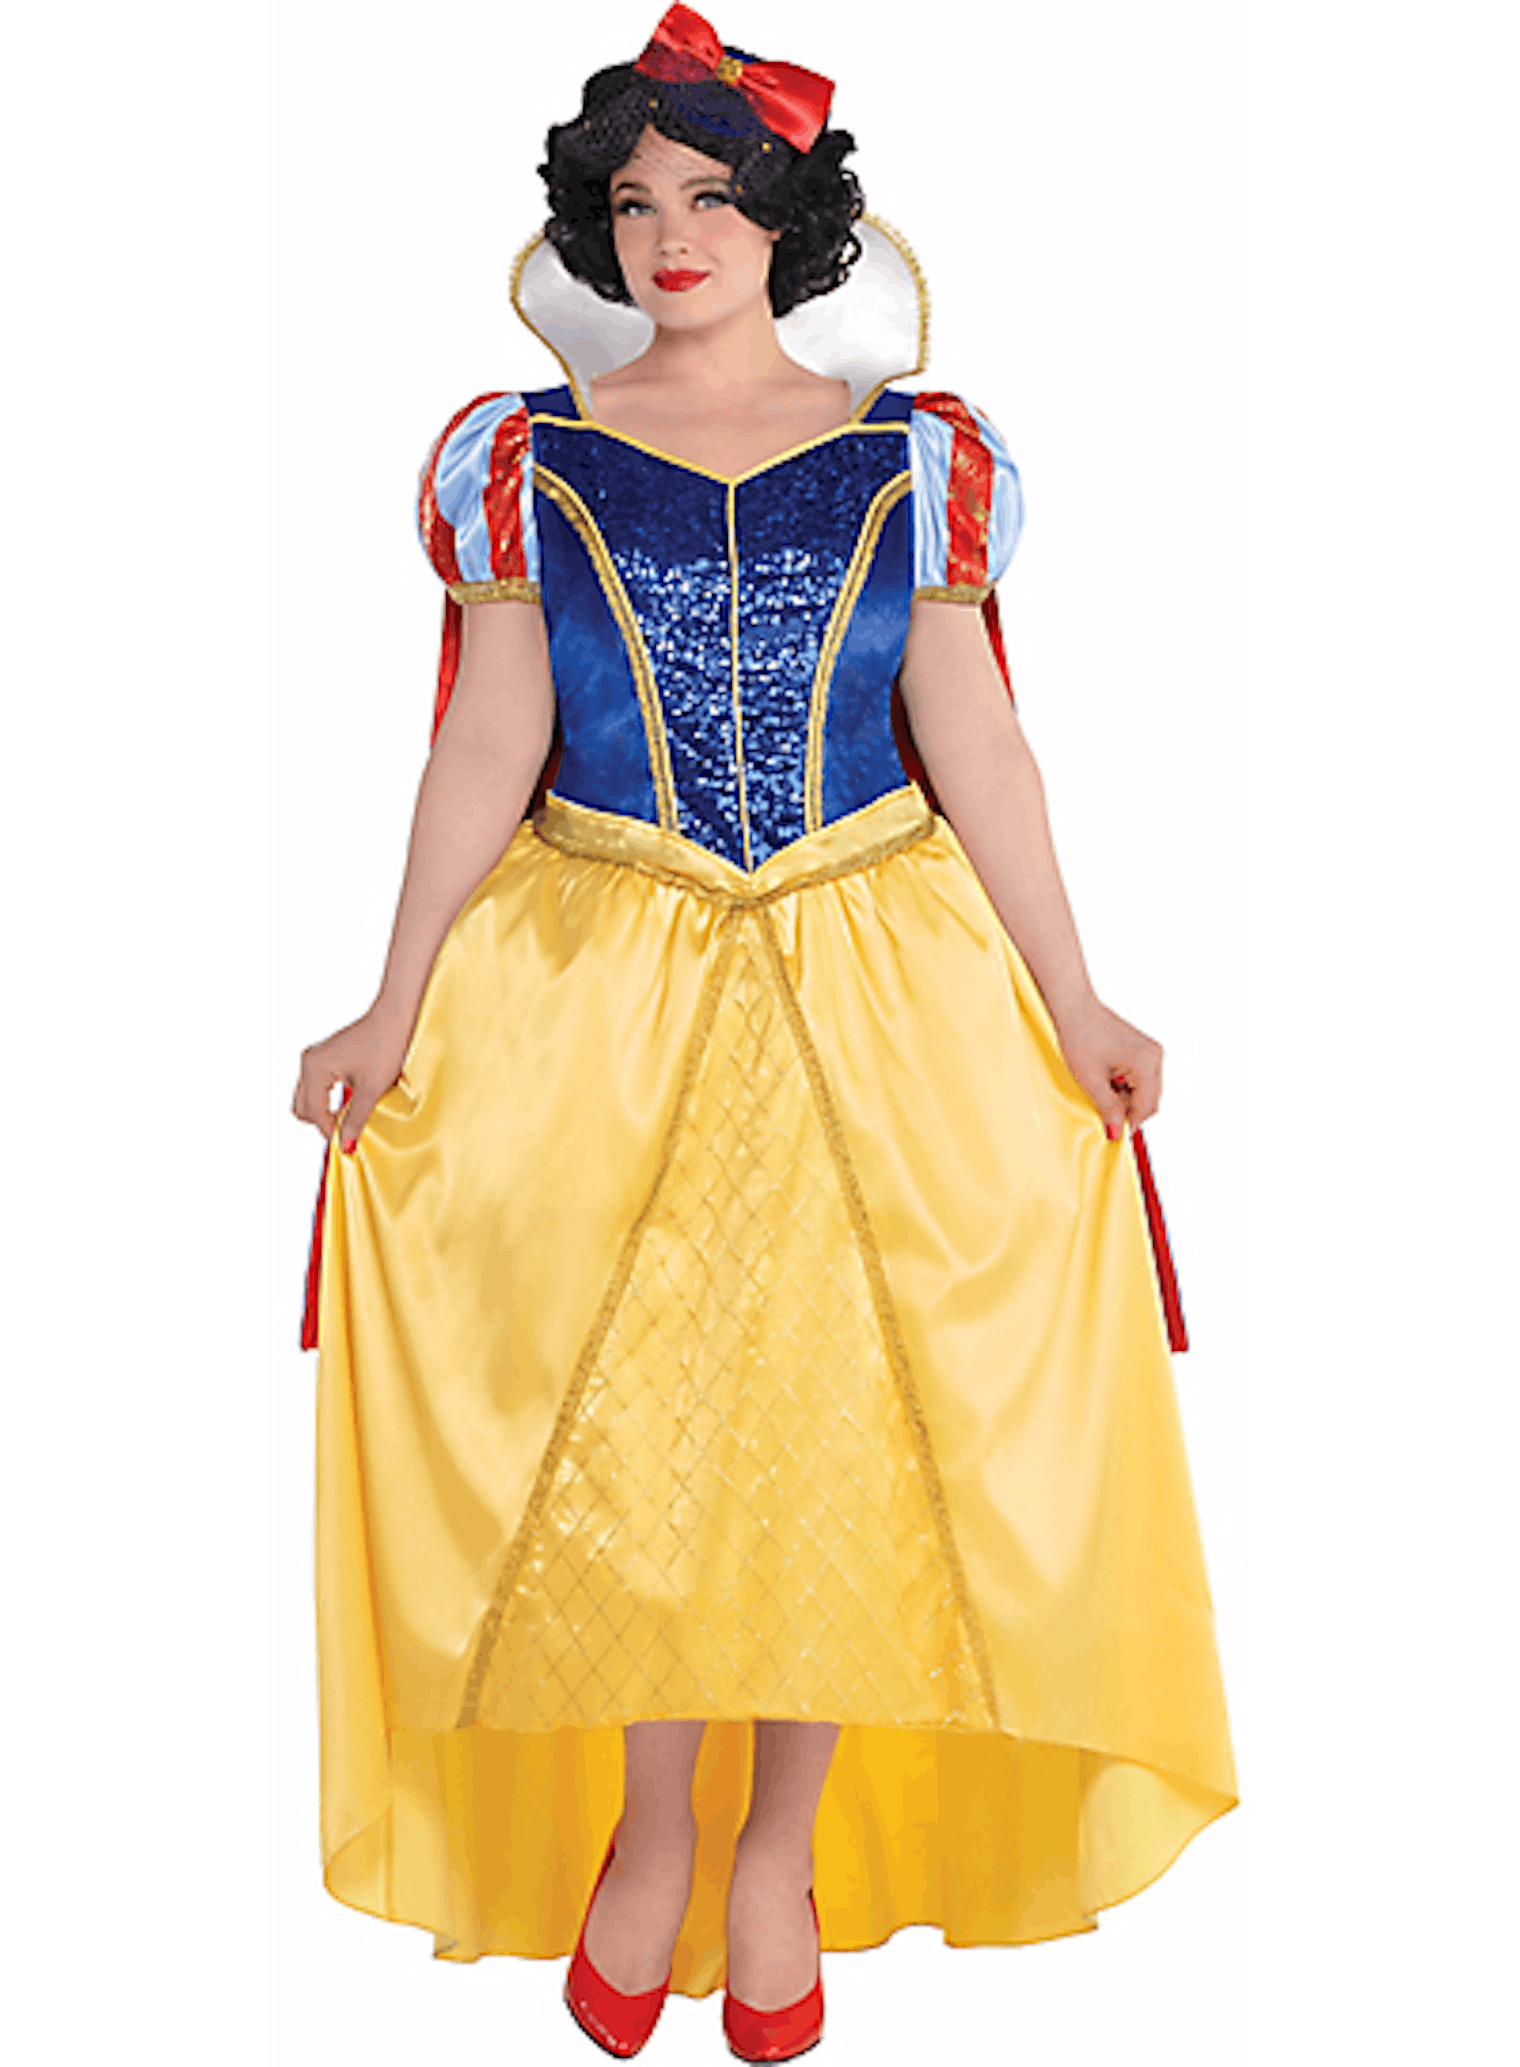 A Plus Size Snow White Halloween Costume To Celebrate The First Disney